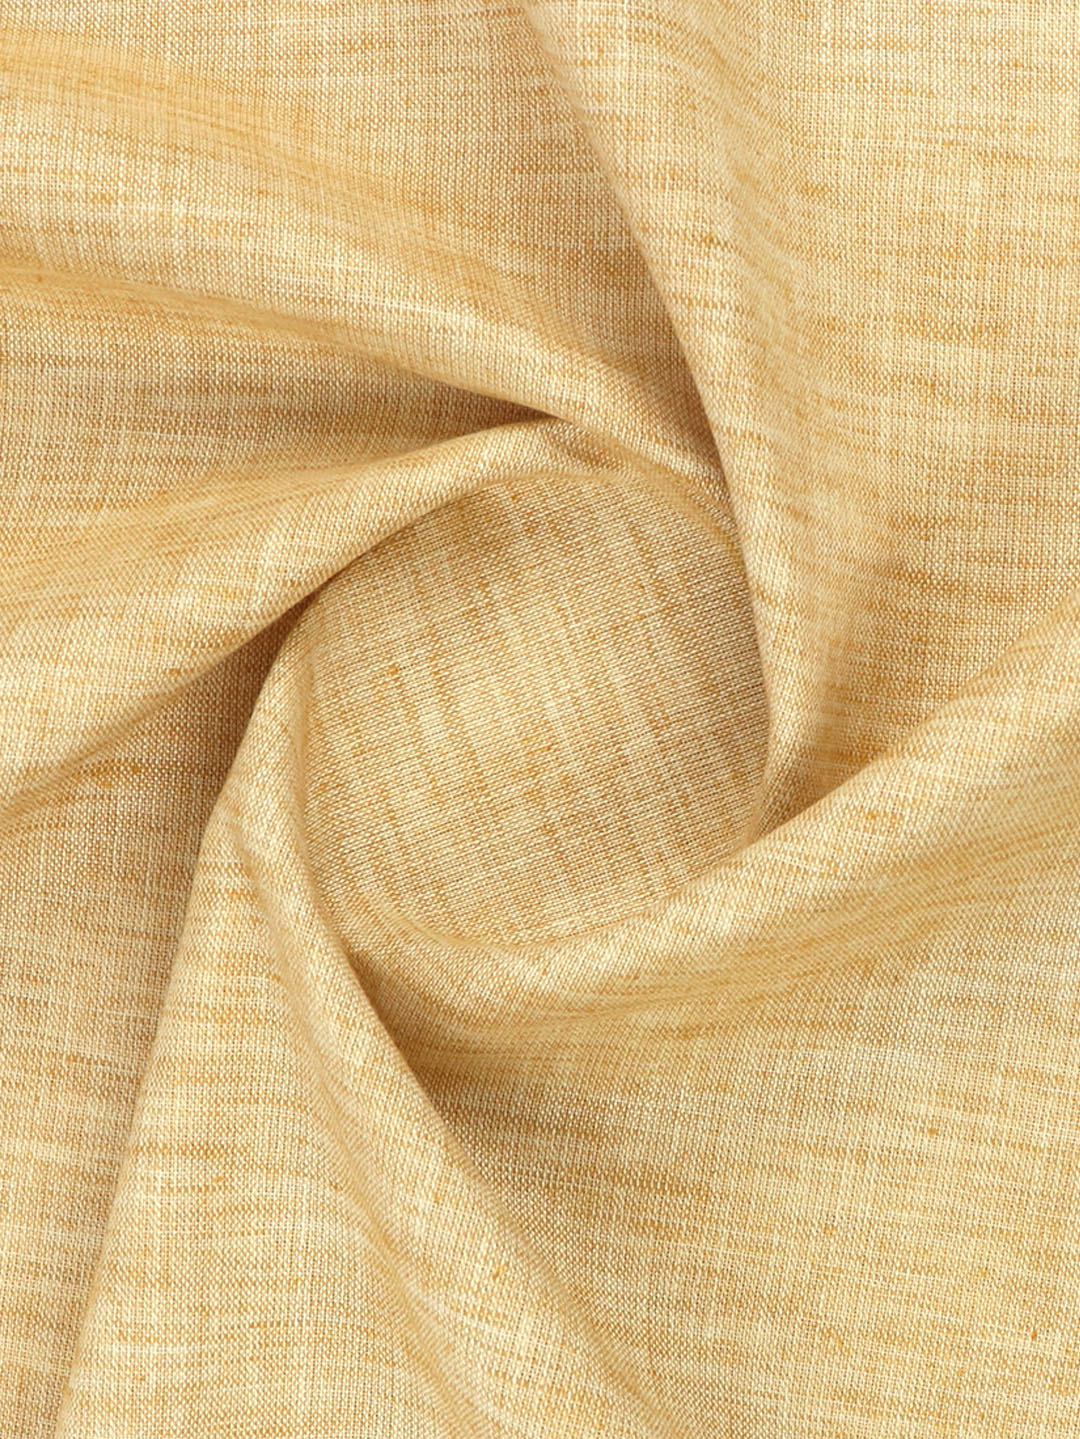 Cotton Blend Sandal Colour Kurtha Fabric Lampus - CAPC1160-14